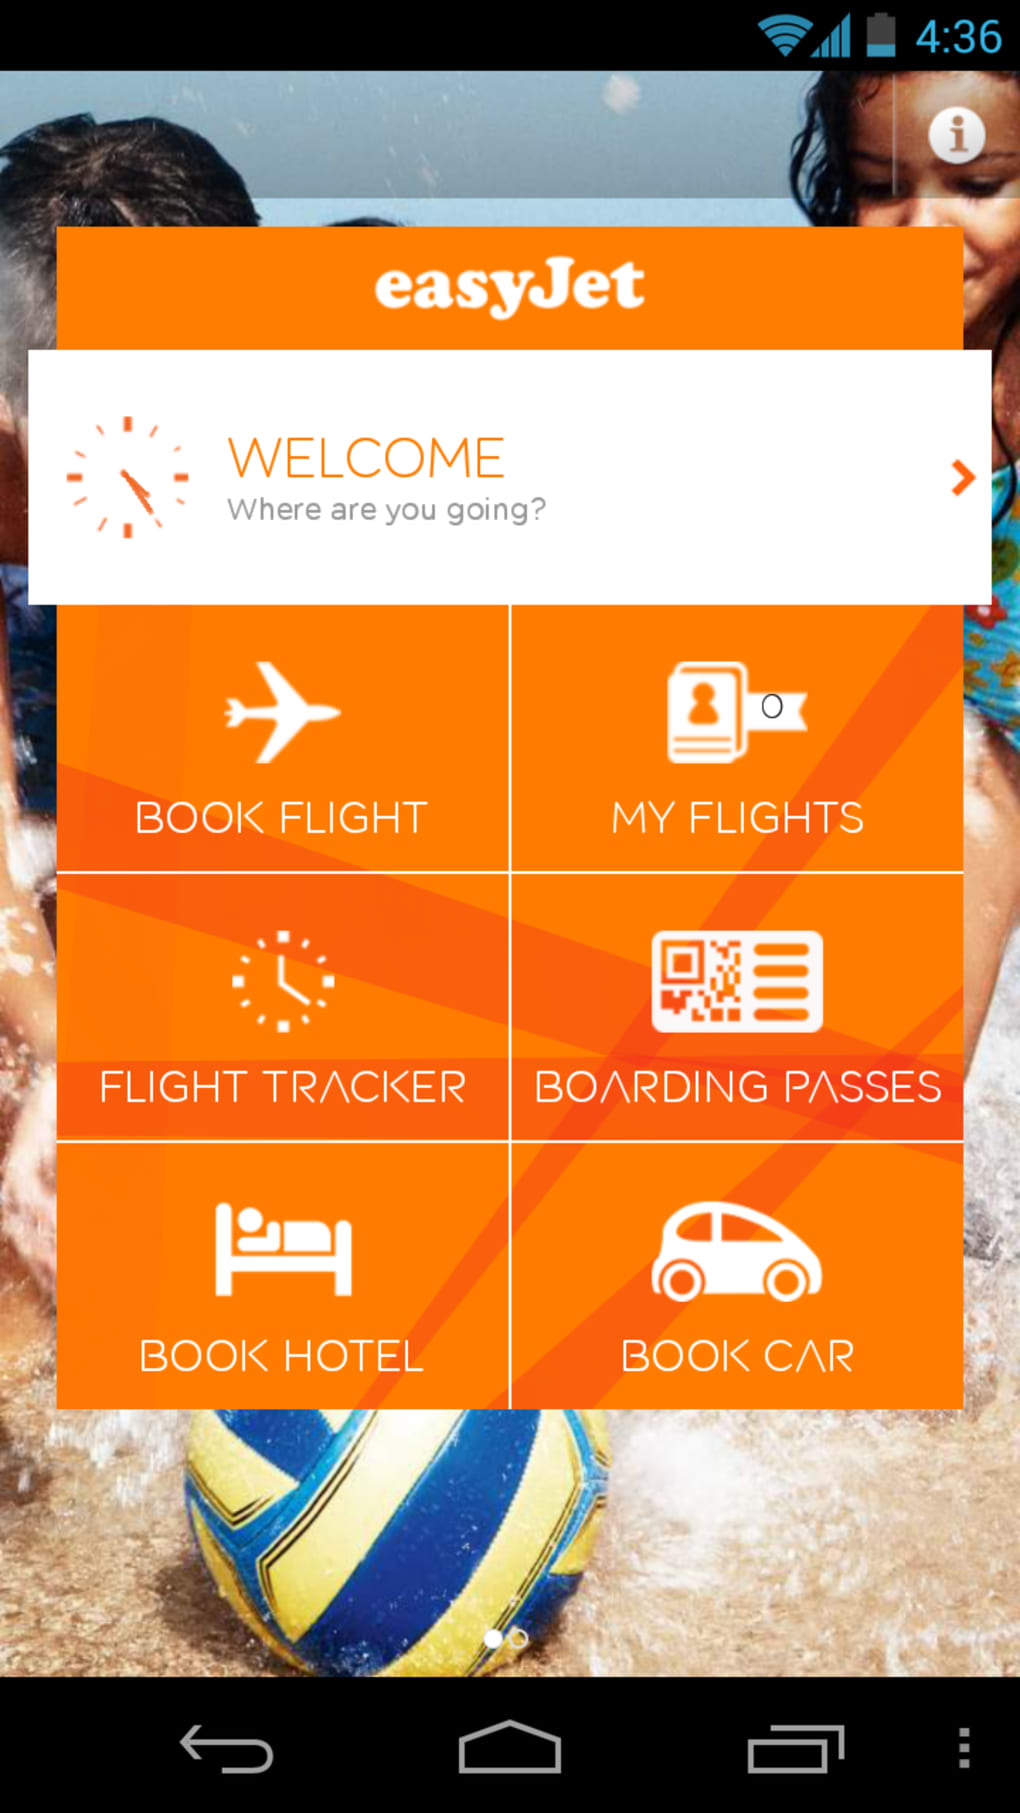 easyjet staff travel app